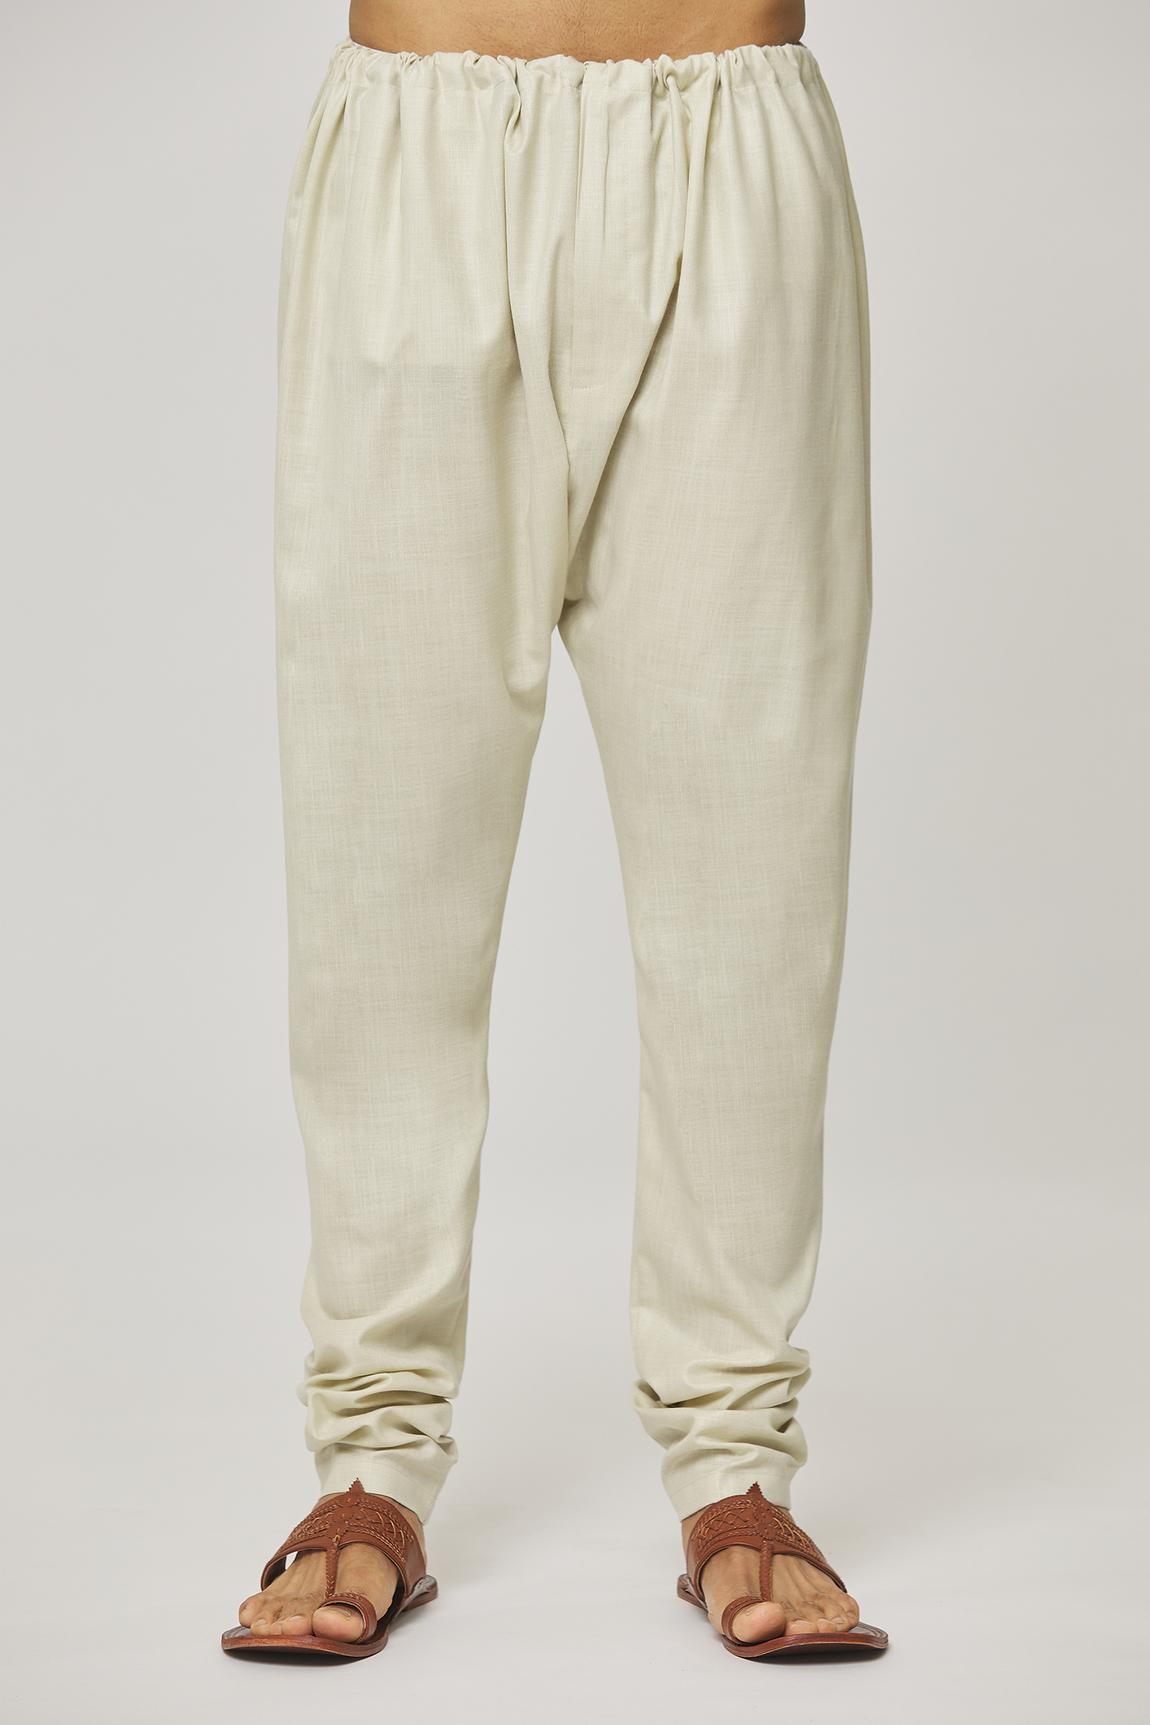 Tatvam Kiyoshi Cotton Solid Kurta & Pyjama Set